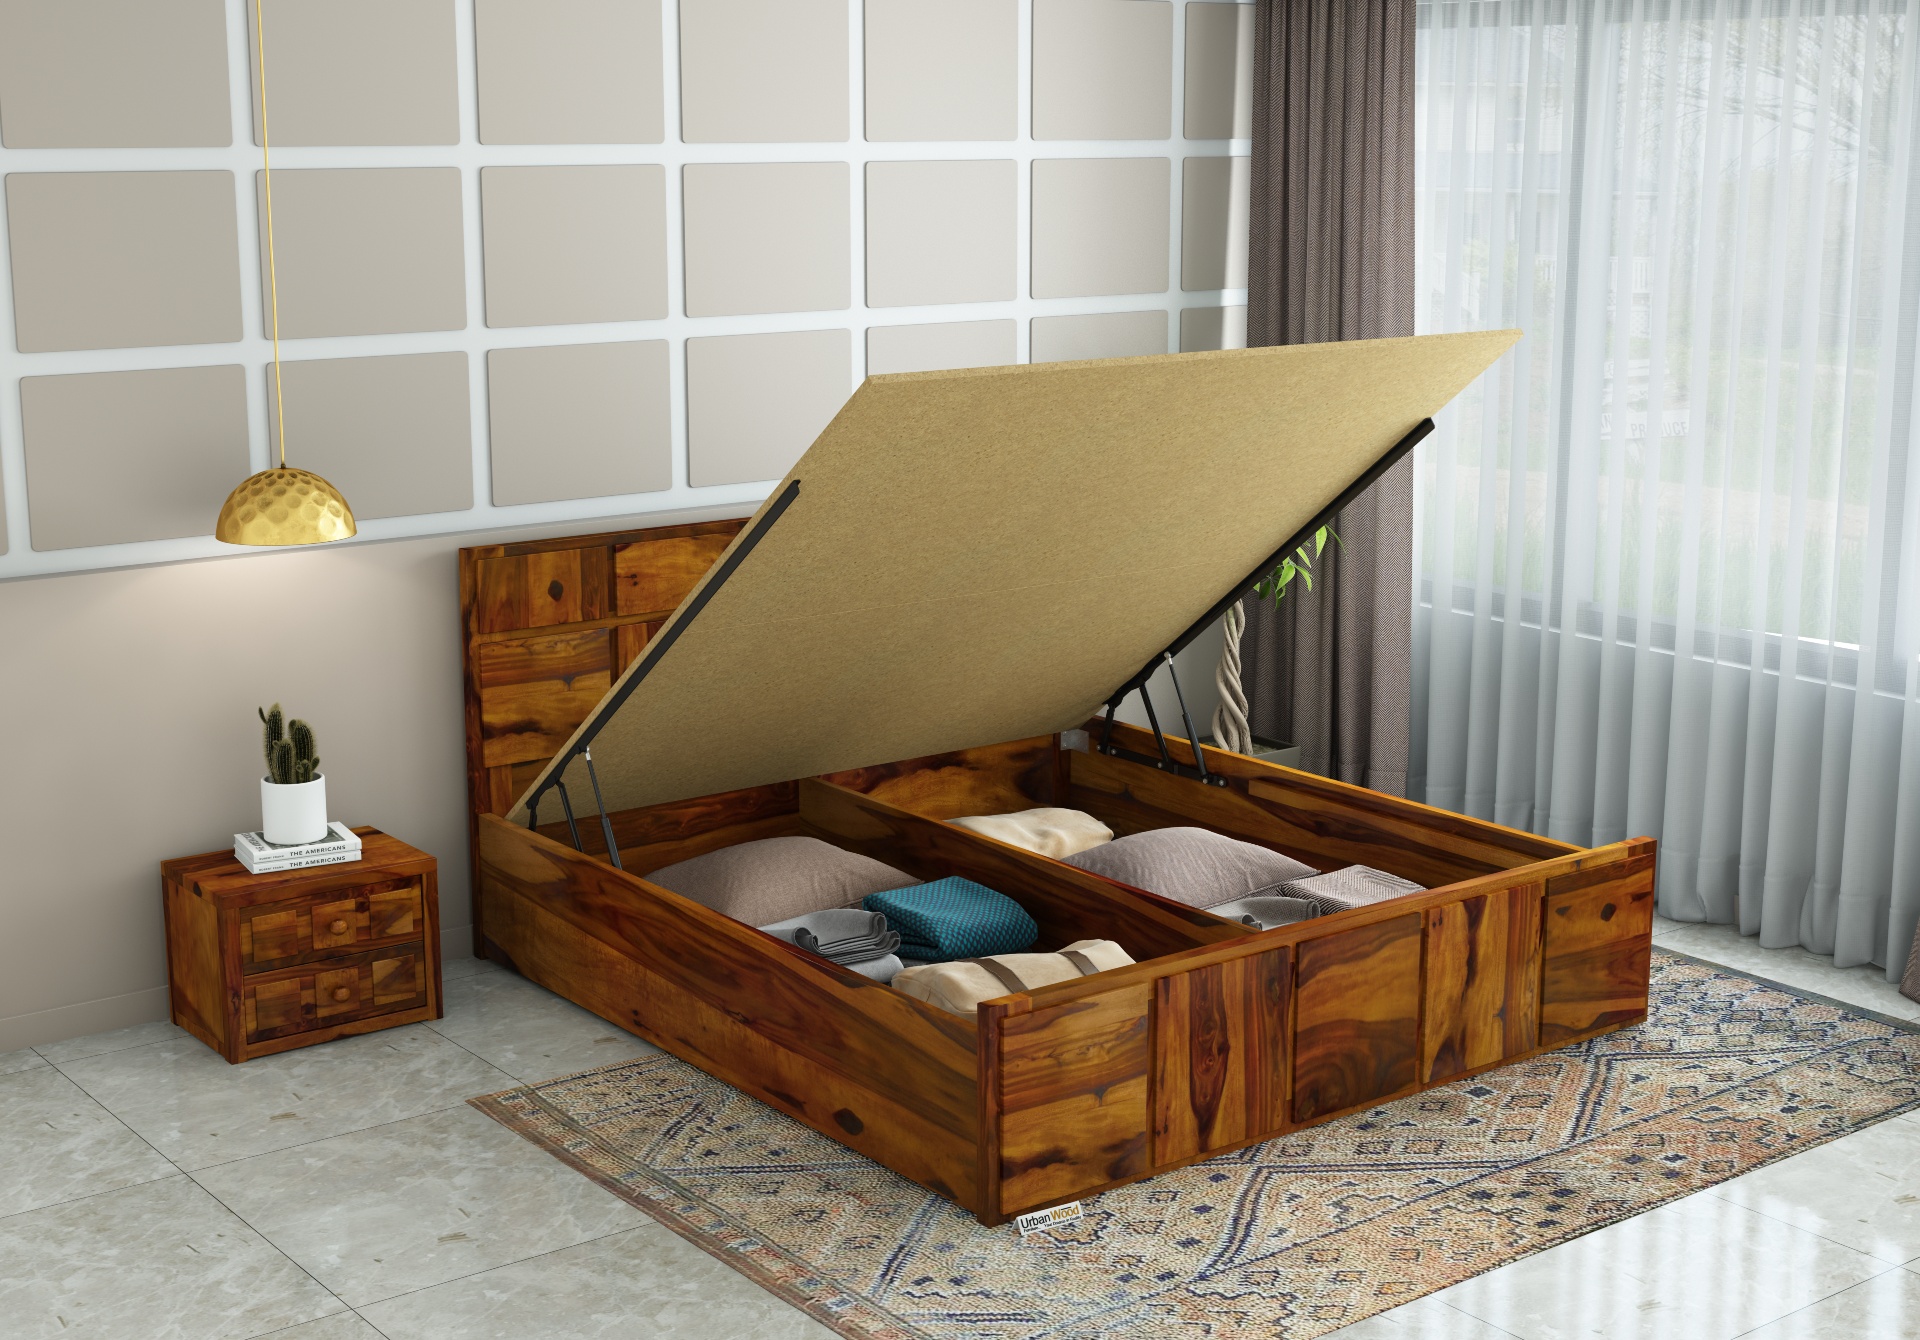 Bedswind Hydraulic Storage Bed (Queen Size, Honey Finish)